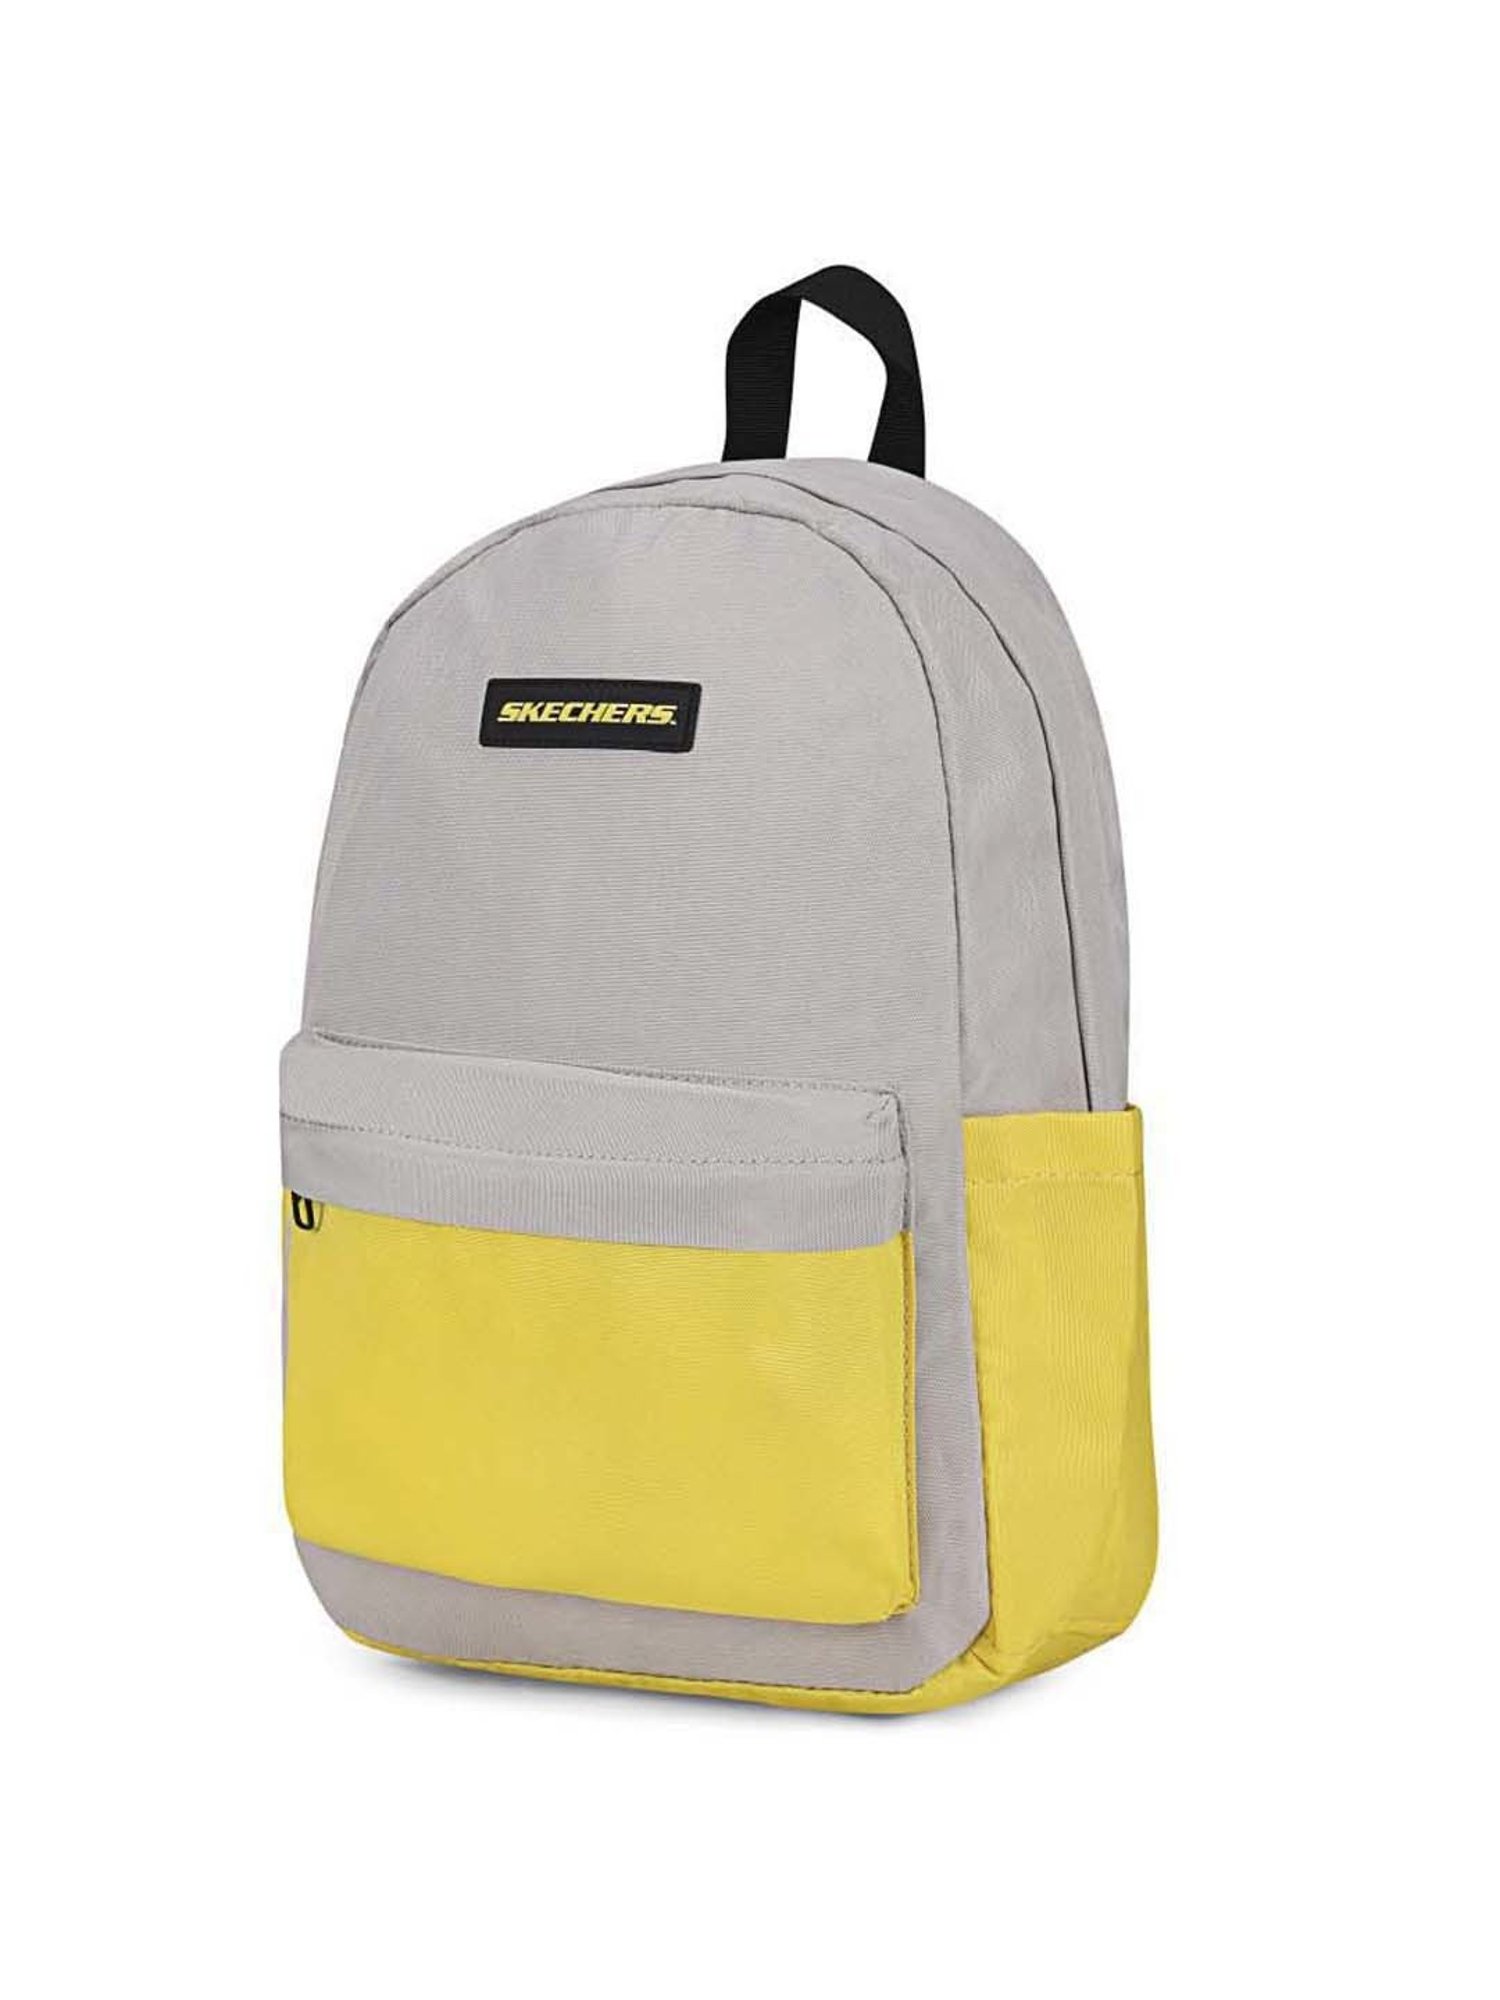 Skechers Skechers backpack for men and women, junior high school students,  college students' school bags, large-